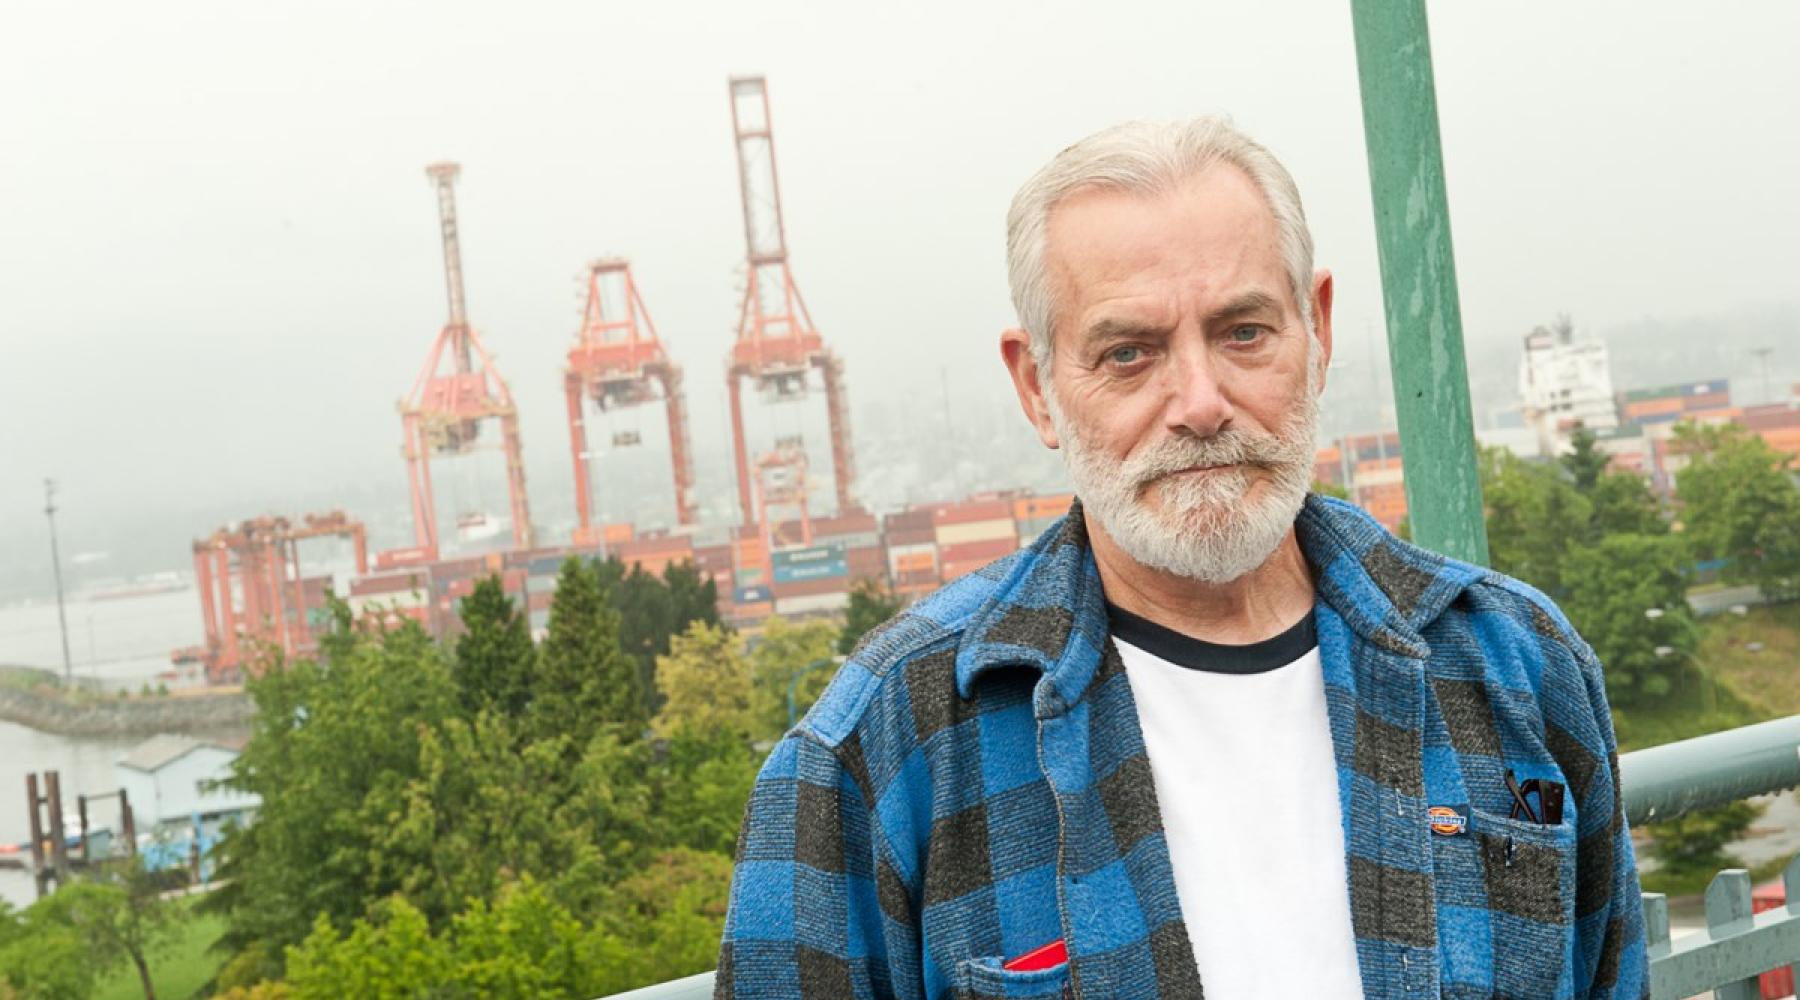 Ken in front of Vancouver Port